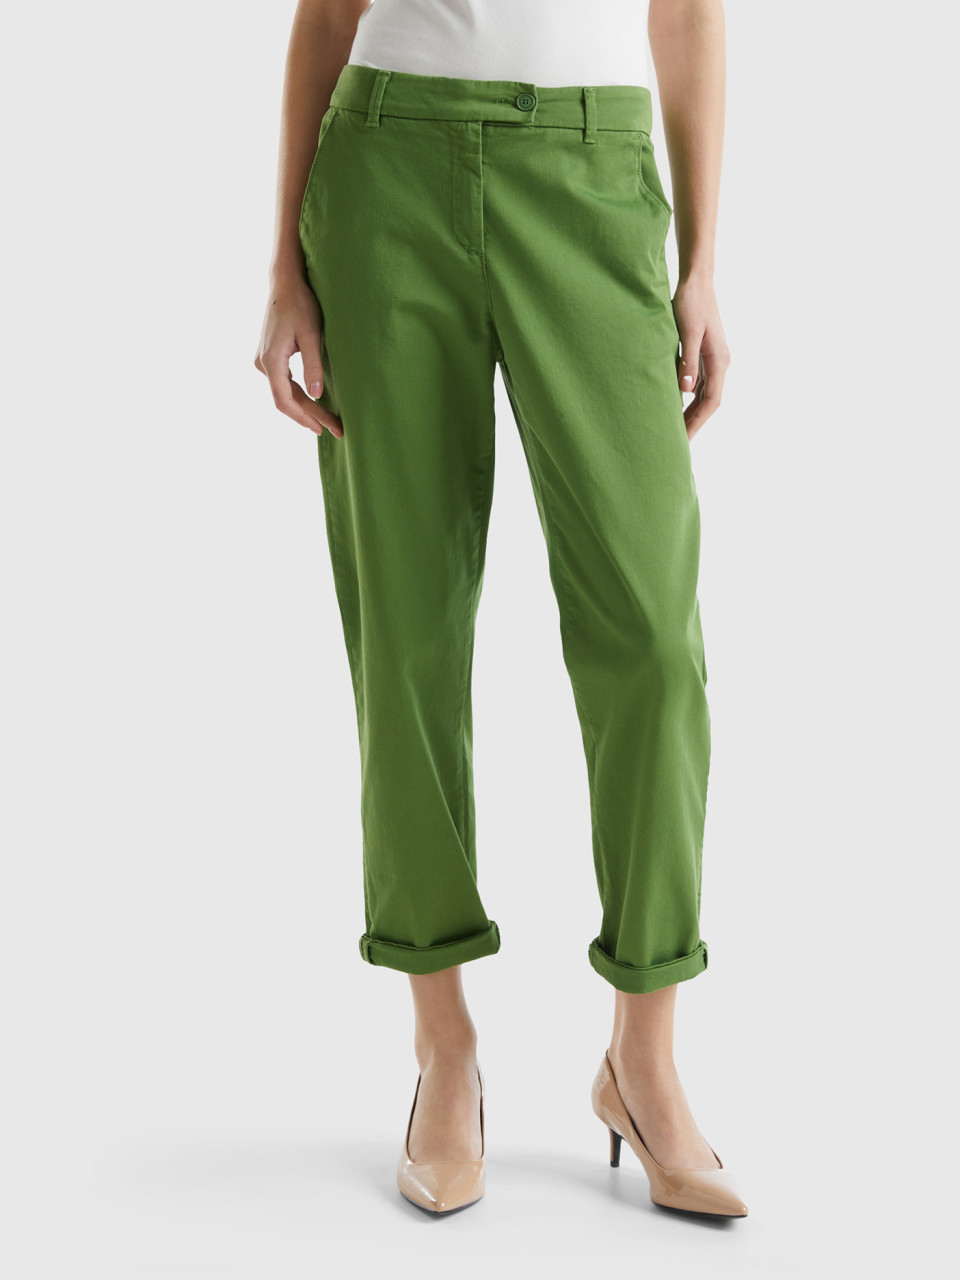 Benetton, Stretch Cotton Chino Trousers, Military Green, Women